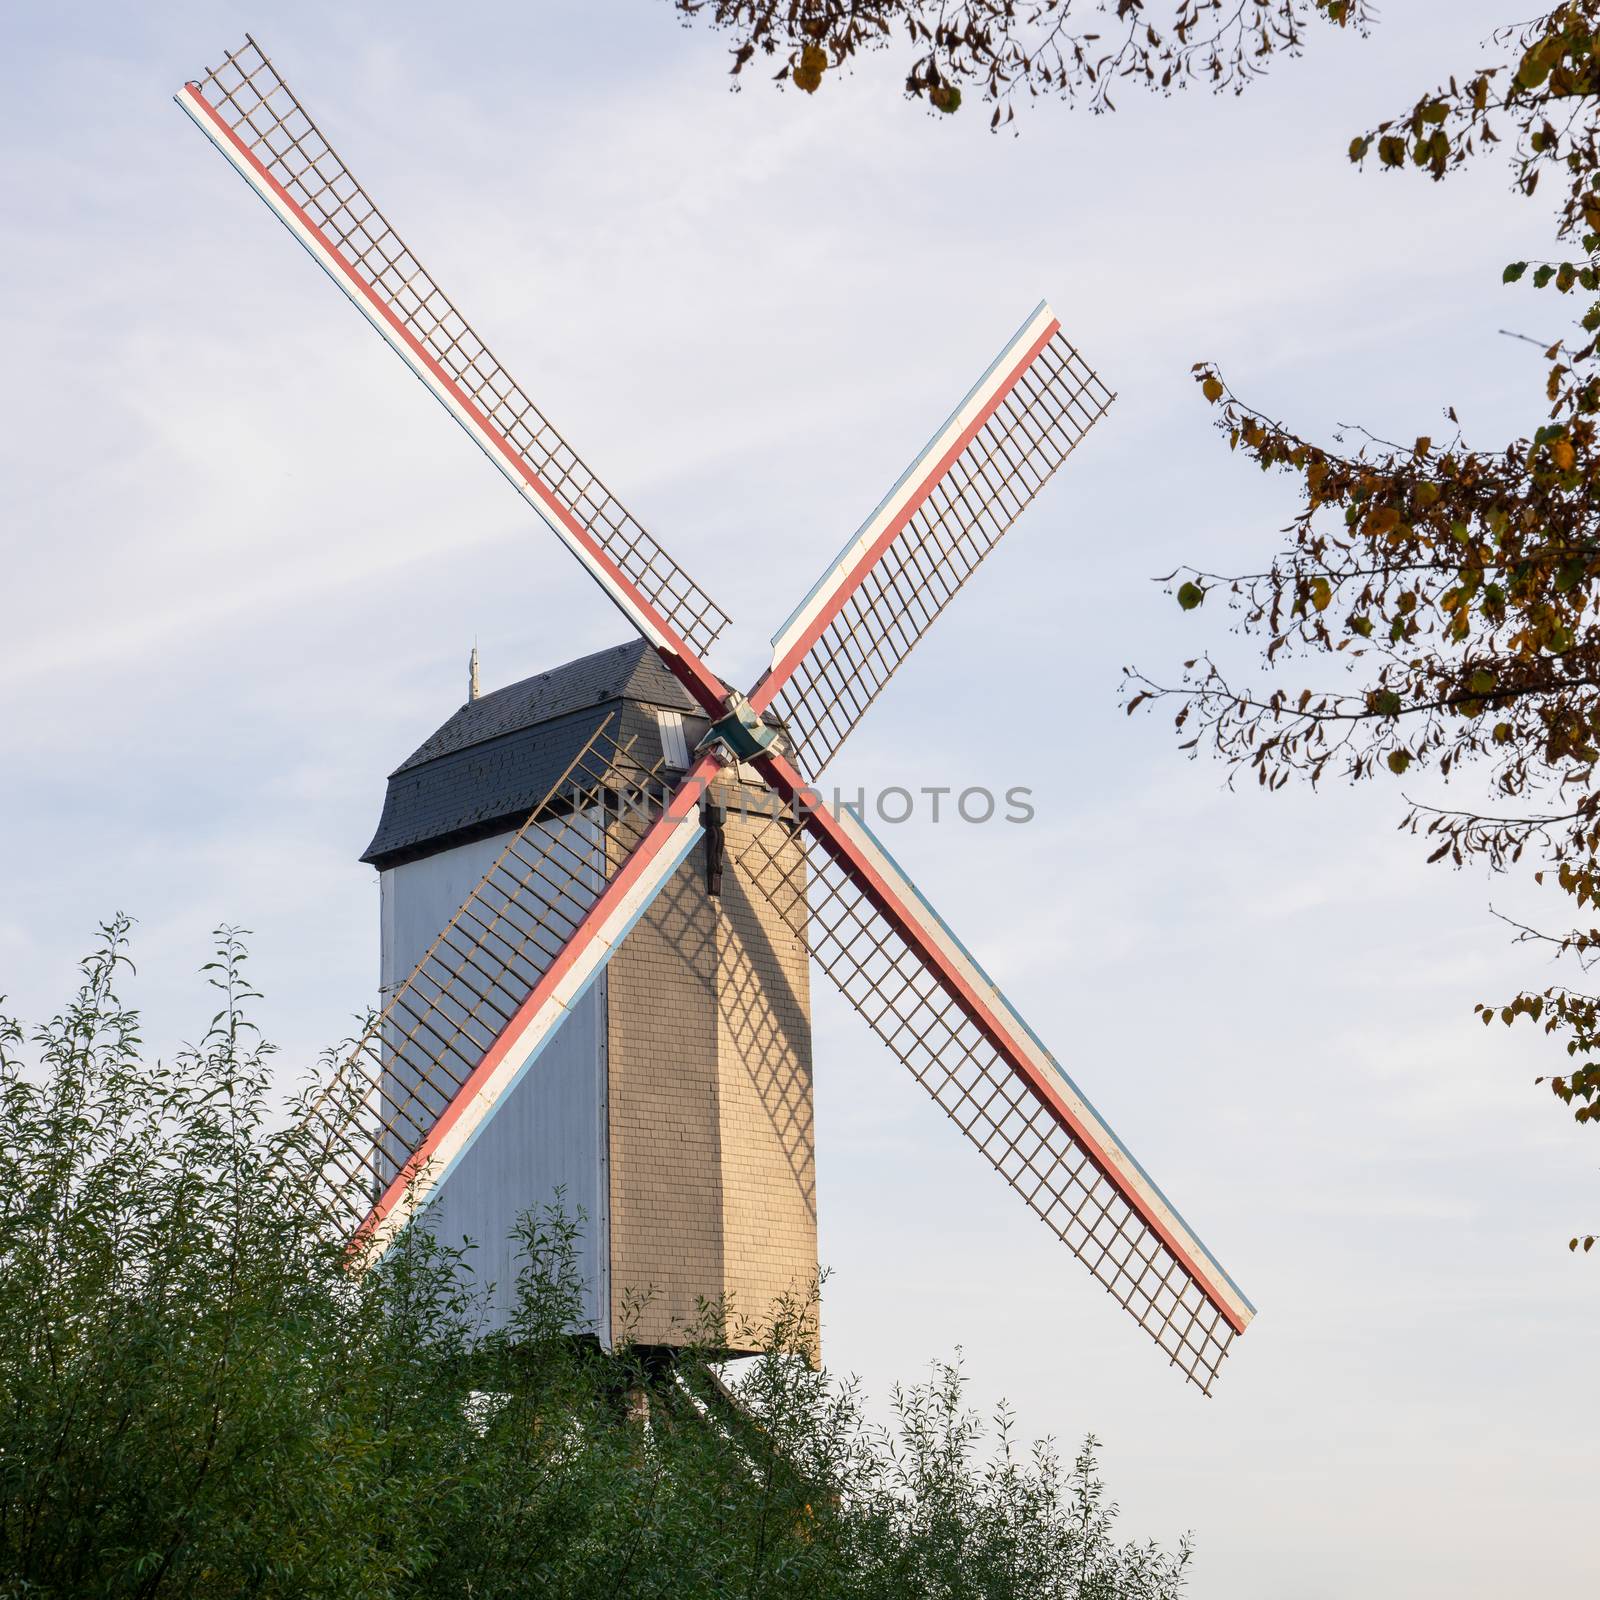 Historic windmill, Bruges, Belgium by alfotokunst